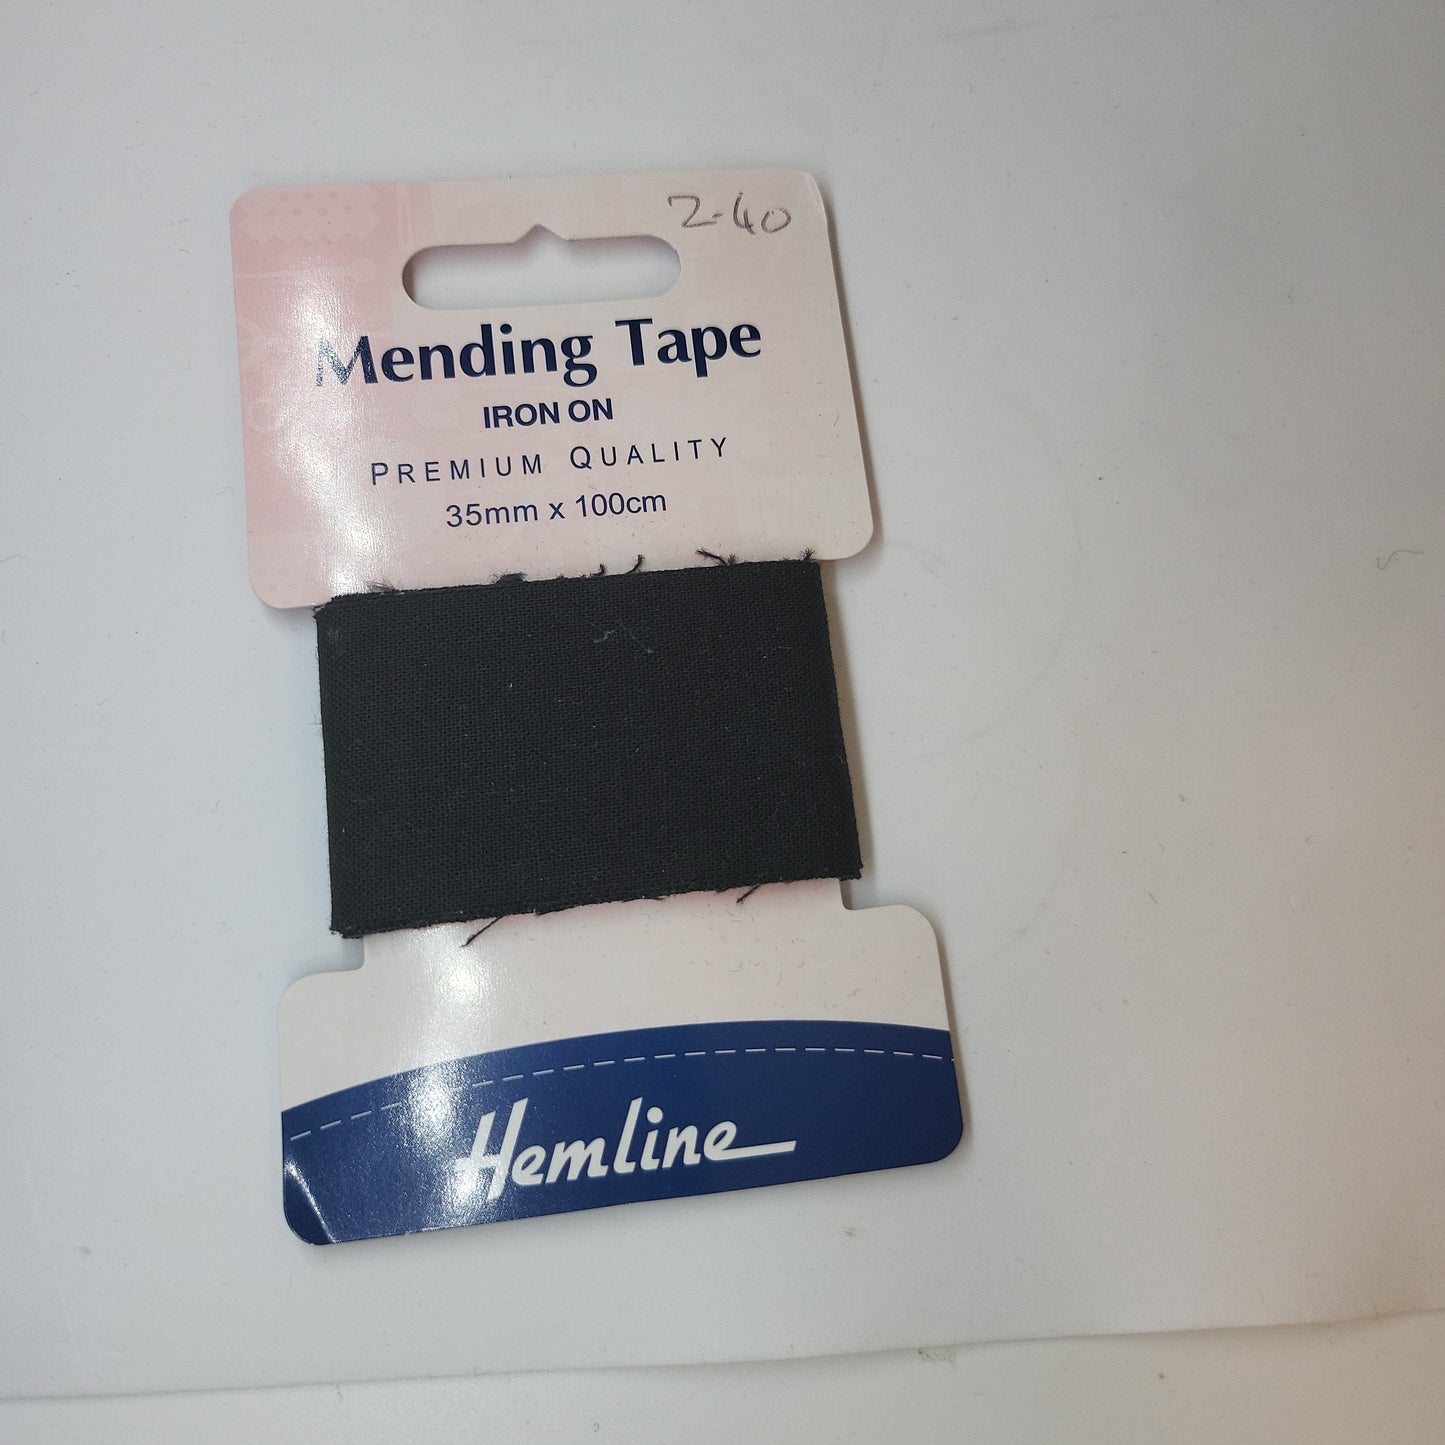 Iron-On Mending Tape